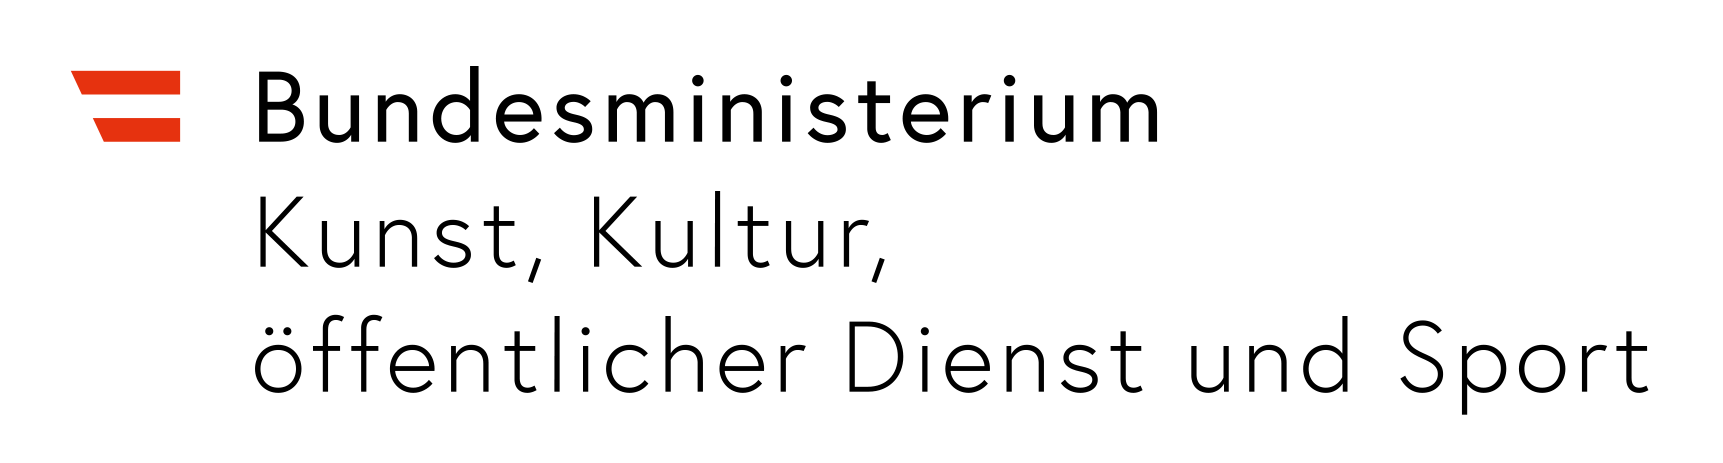 BMKOES Logo srgb